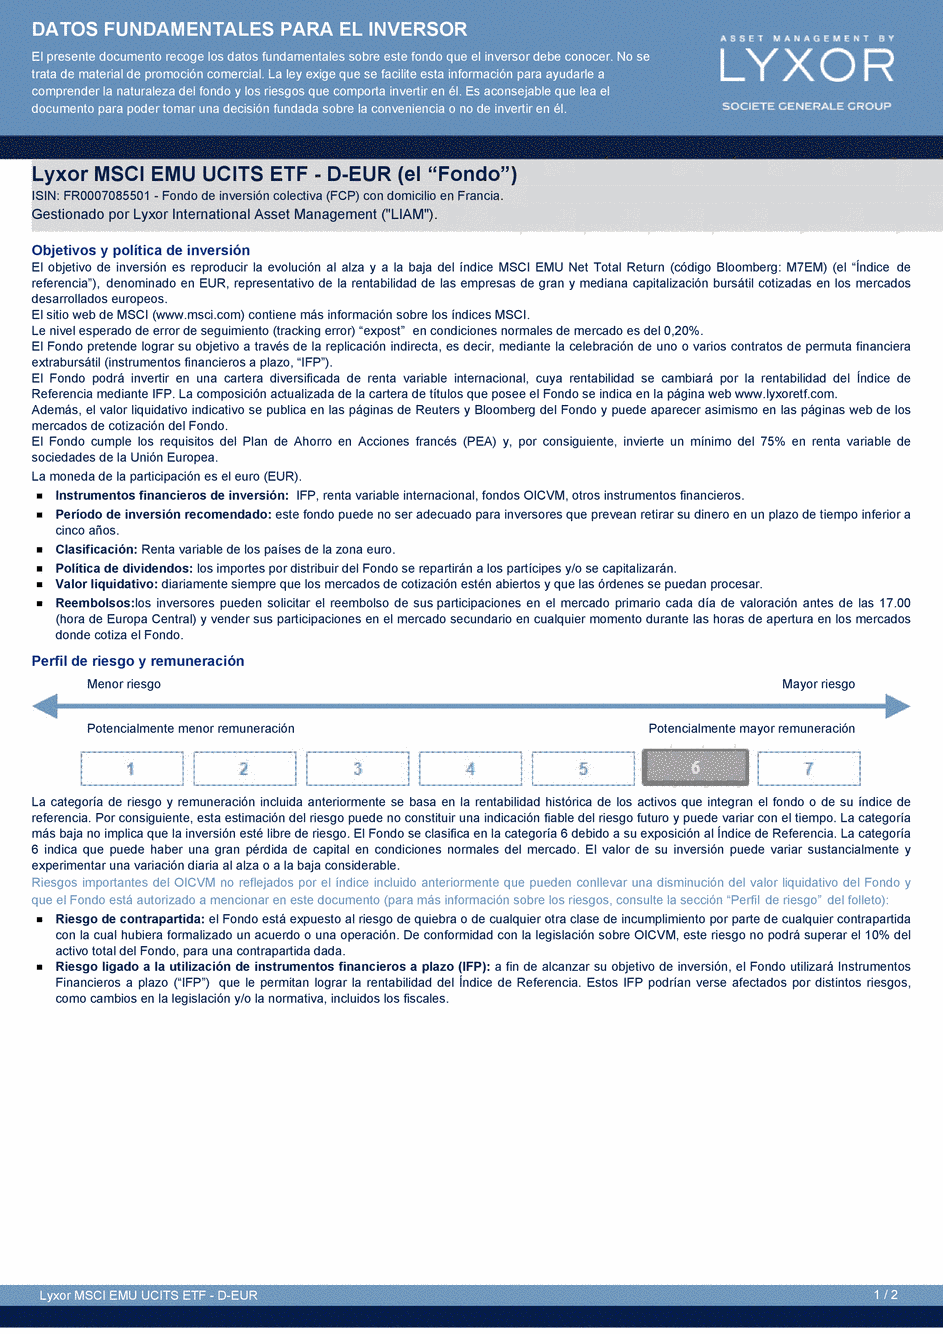 DICI LYXOR MSCI EMU UCITS ETF - 29/10/2015 - Espagnol